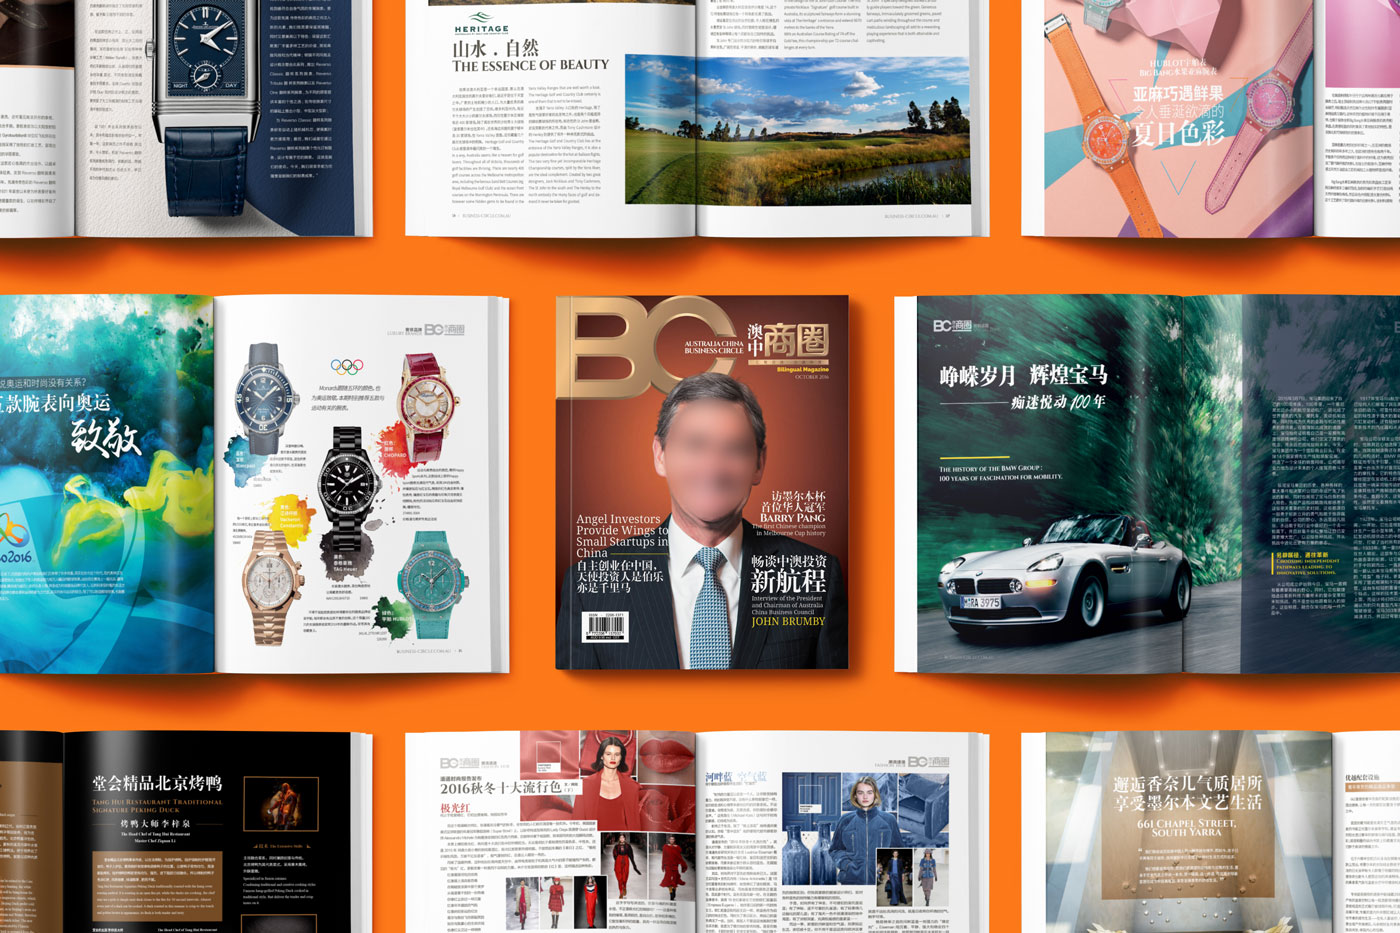 bc branding & magazine design by Z Creative Studio Branding & Graphic Design Melbourne